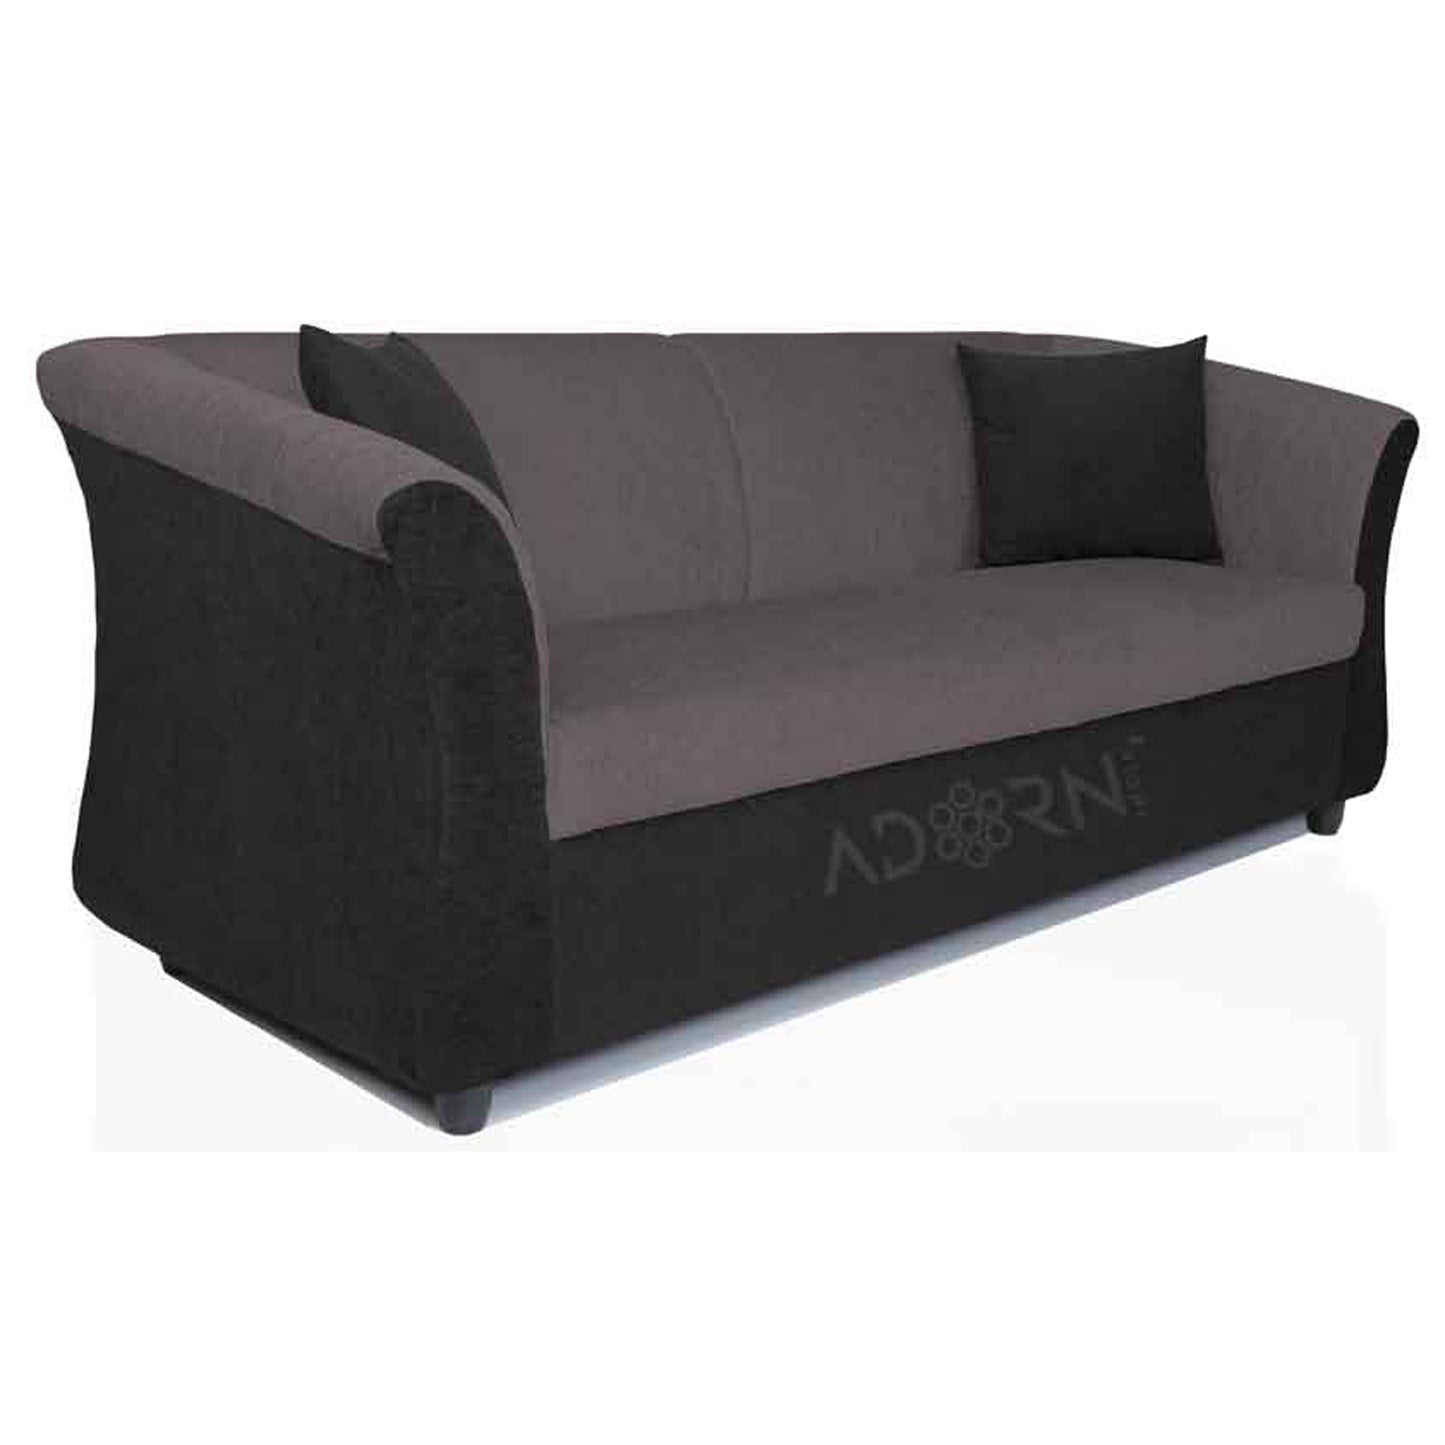 Adorn India Acura 3 Seater Sofa (Grey & Black)